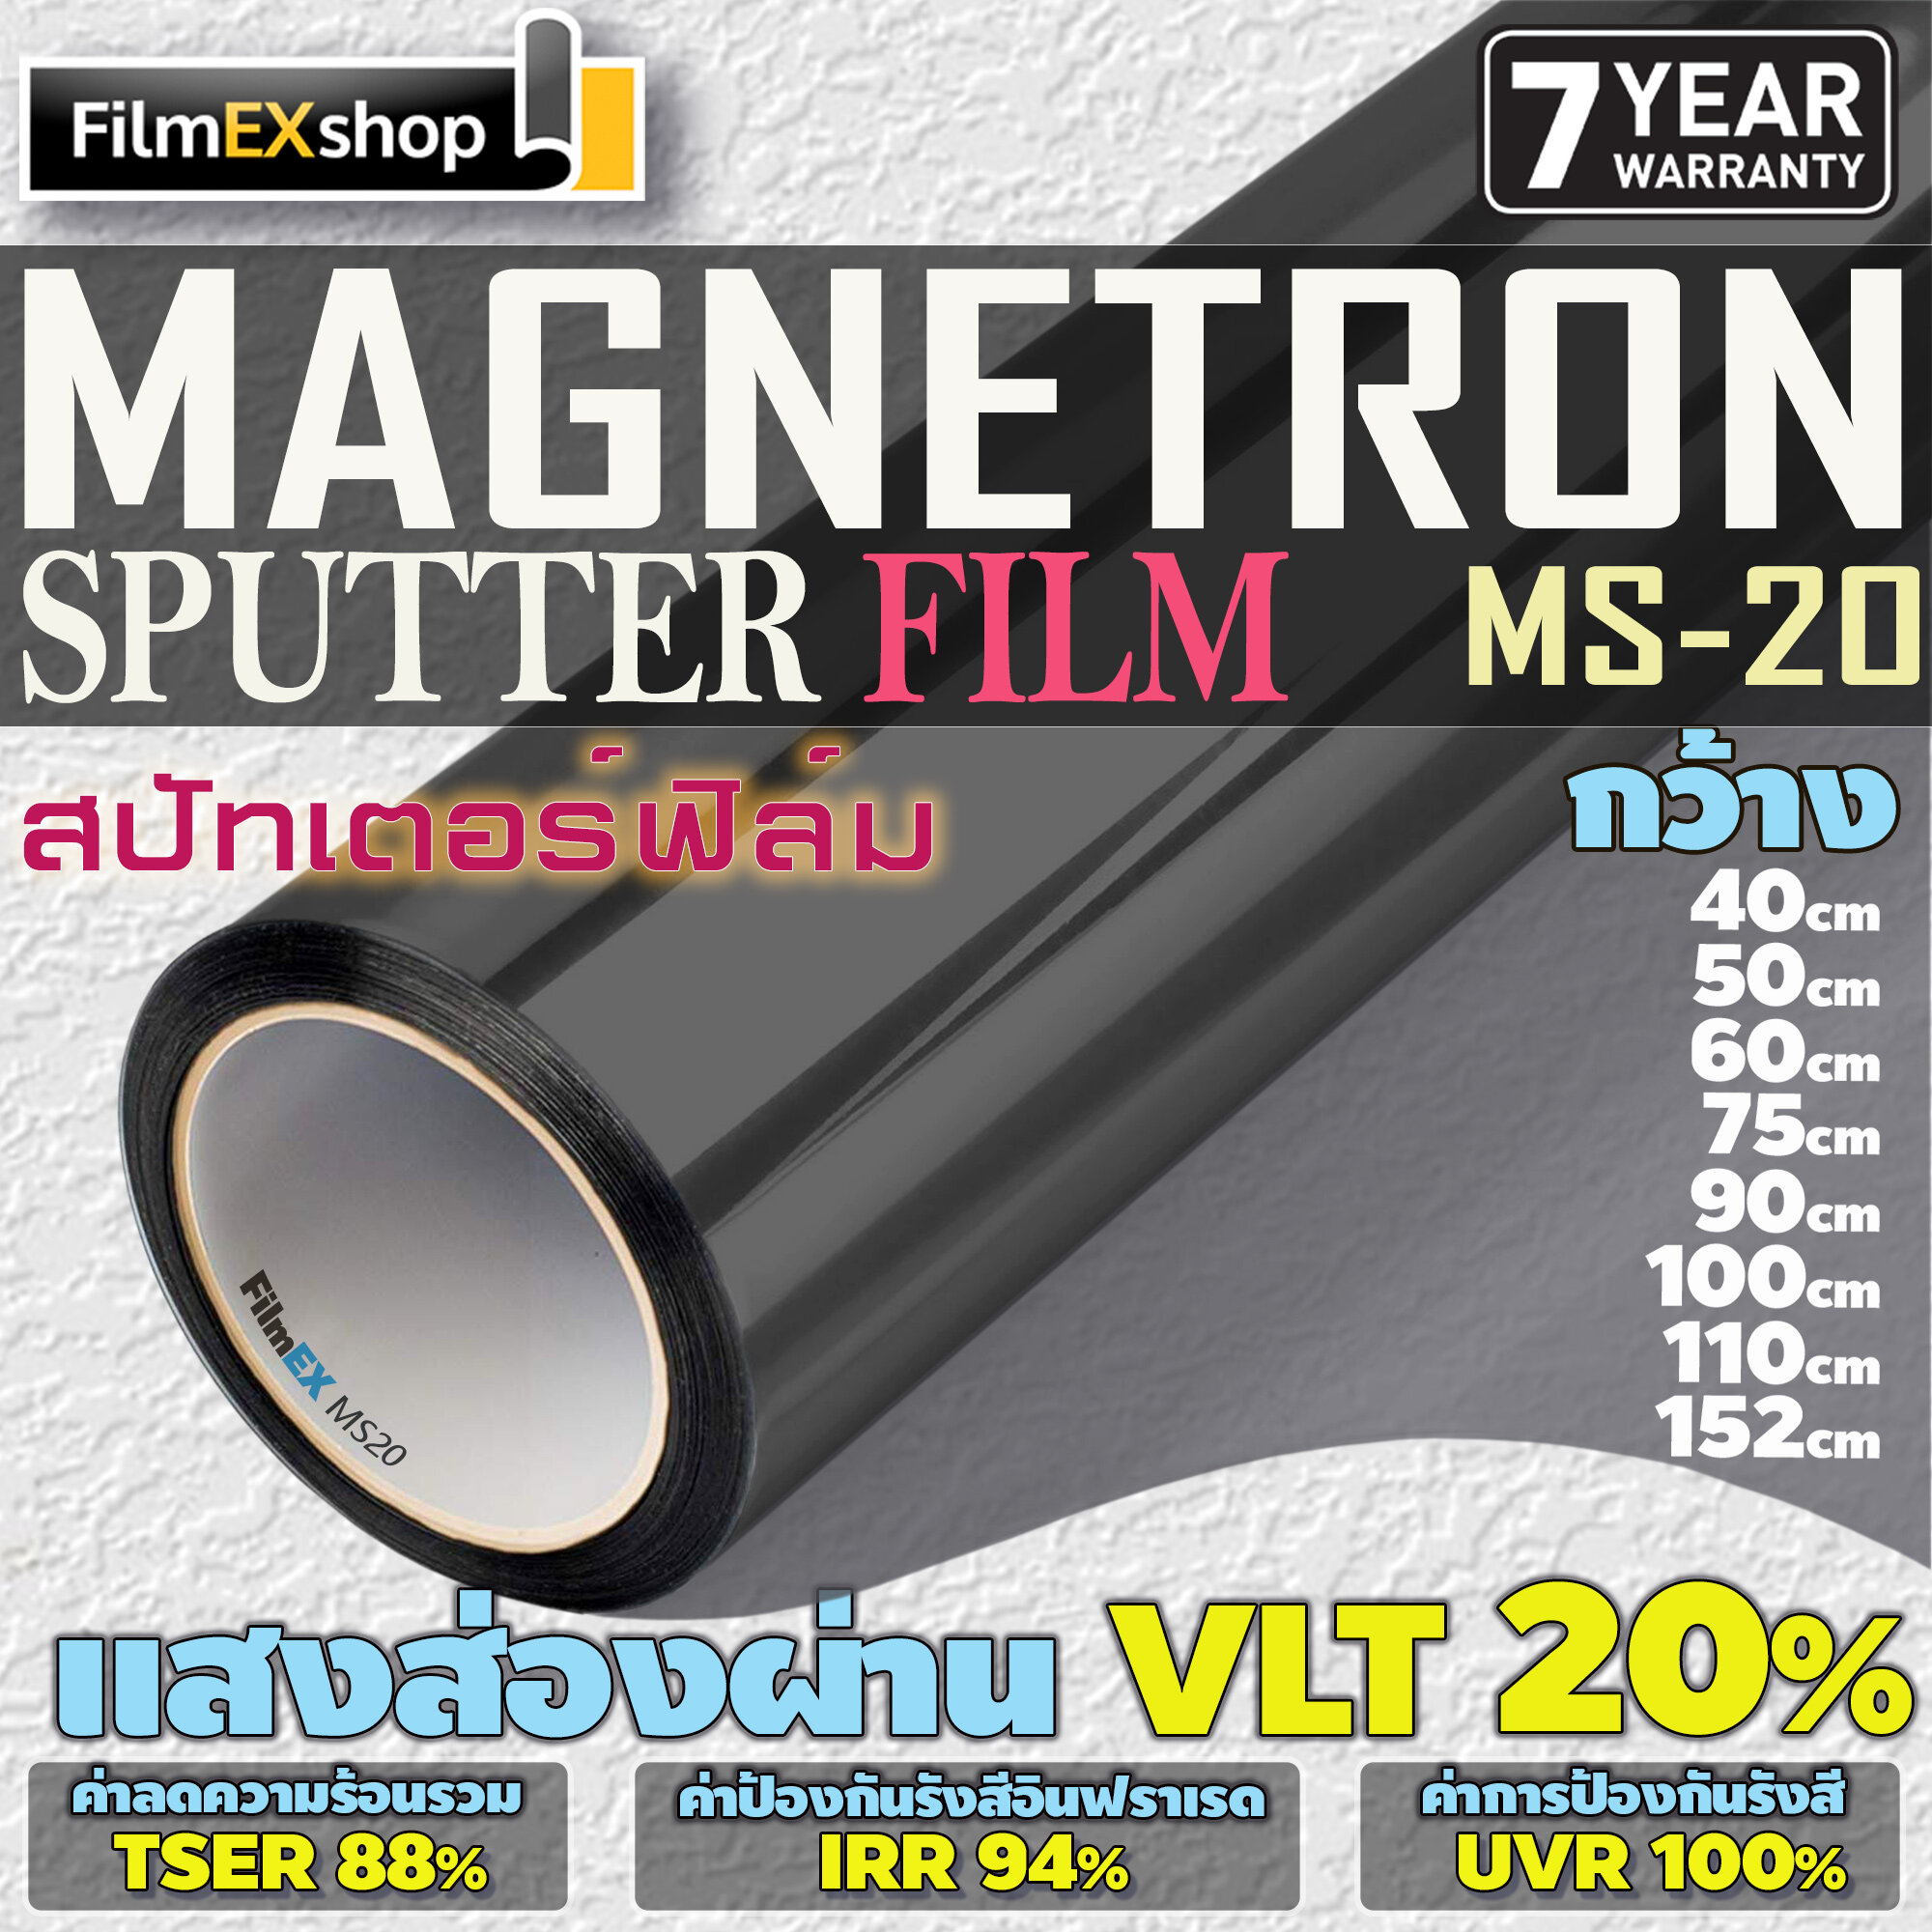 MS-20 MAGNETRON SPUTTERING WINDOW FILM ฟิล์มรถยนต์  ฟิล์มกรองแสง ฟิล์มเคลือบอนุภาคโลหะ